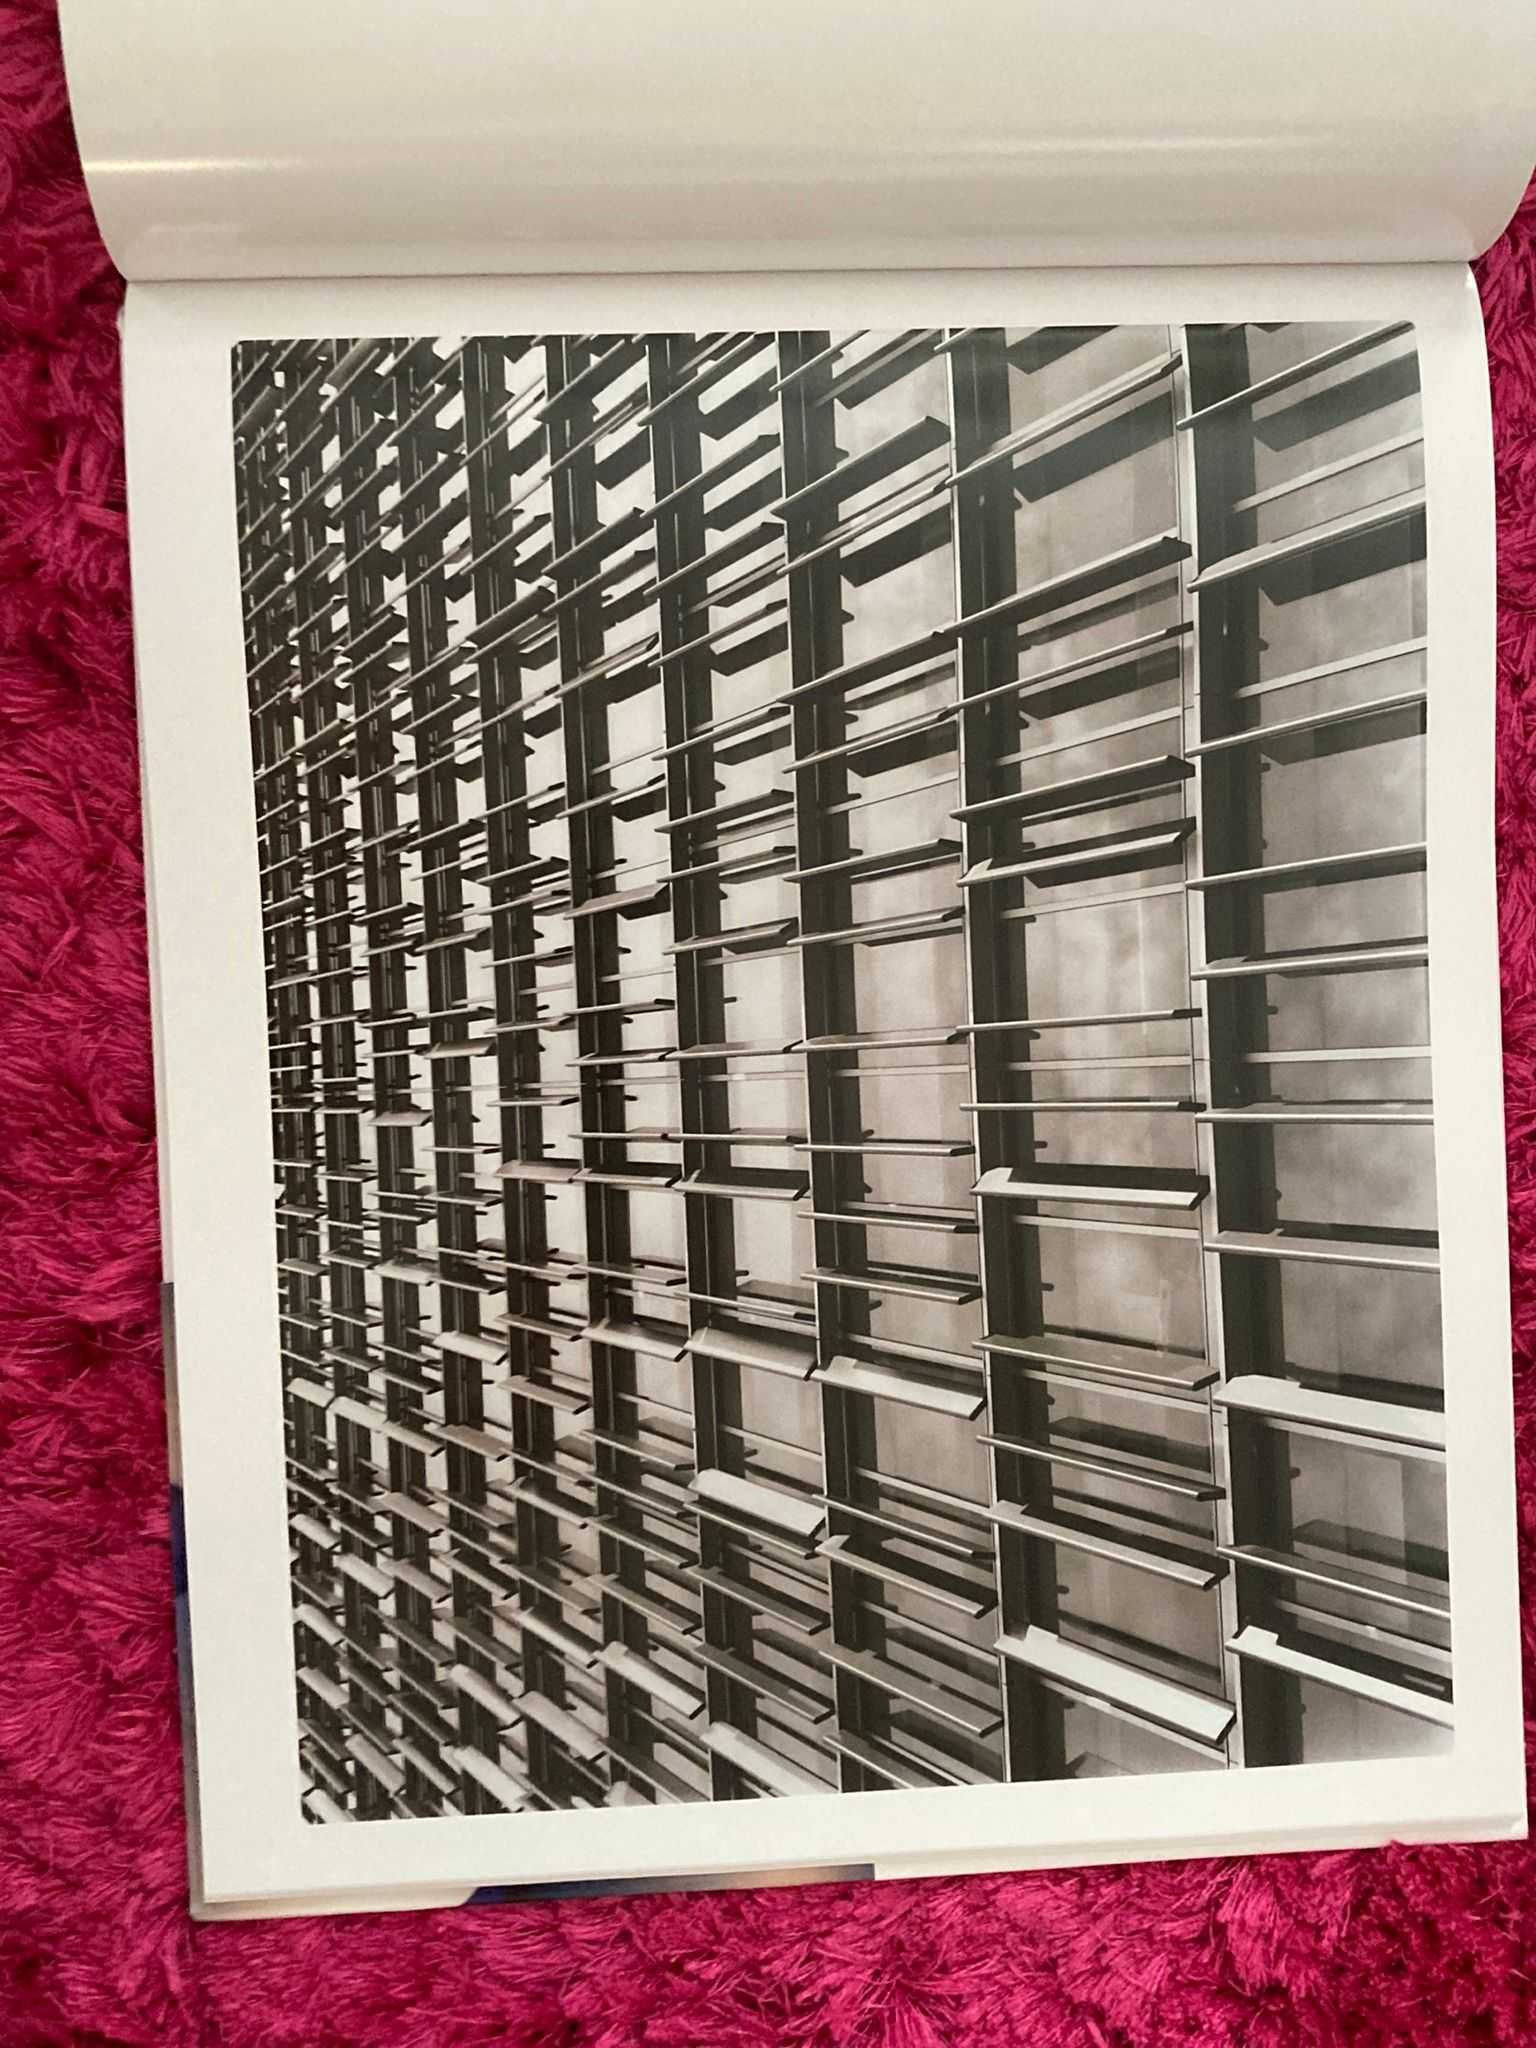 Jenny Okun - Variations carte fotografie arhitecturala cladiri mare